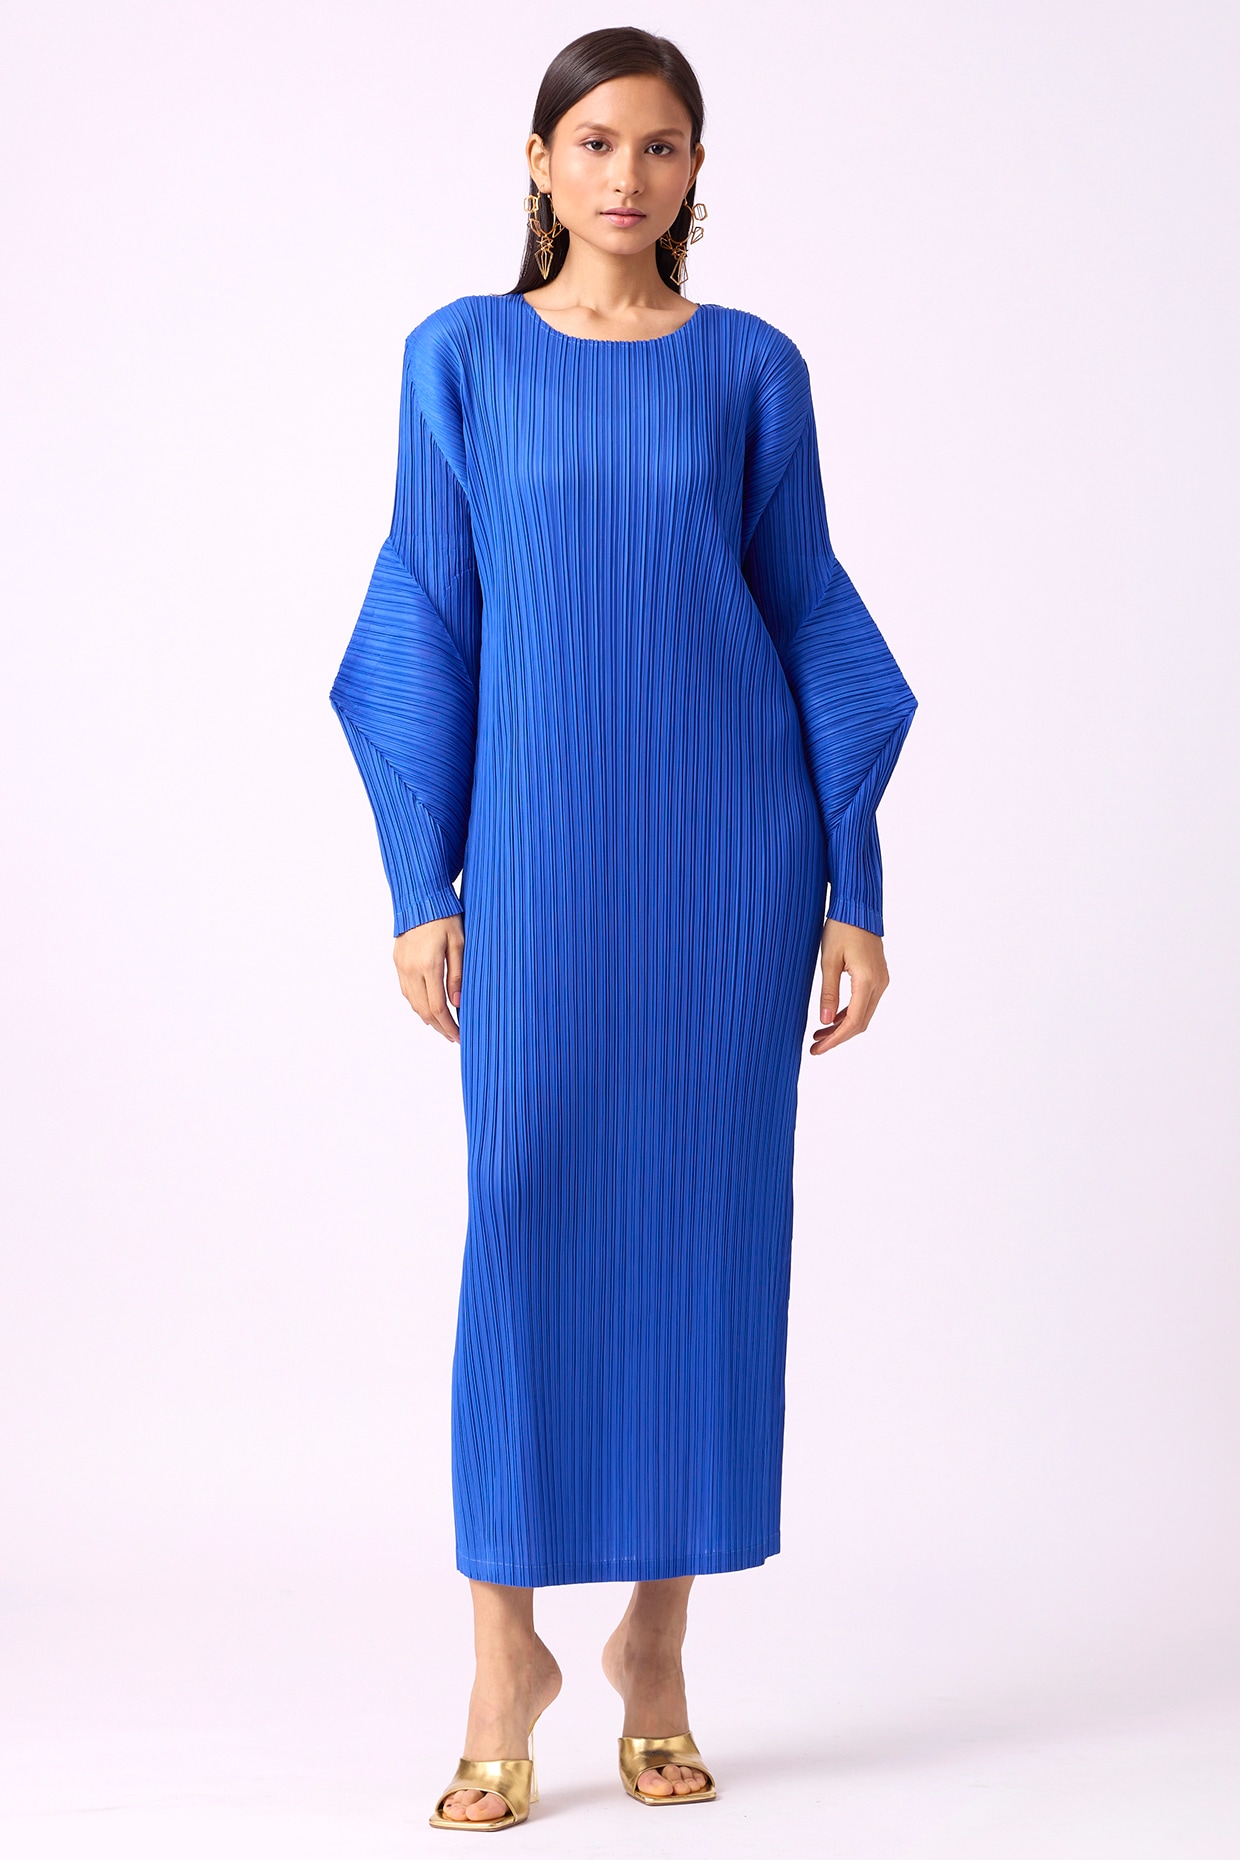 Vogue 1381 Ralph Rucci American Designer Lined 3/4 Sleeve Dress Pattern  4-12 UC | eBay